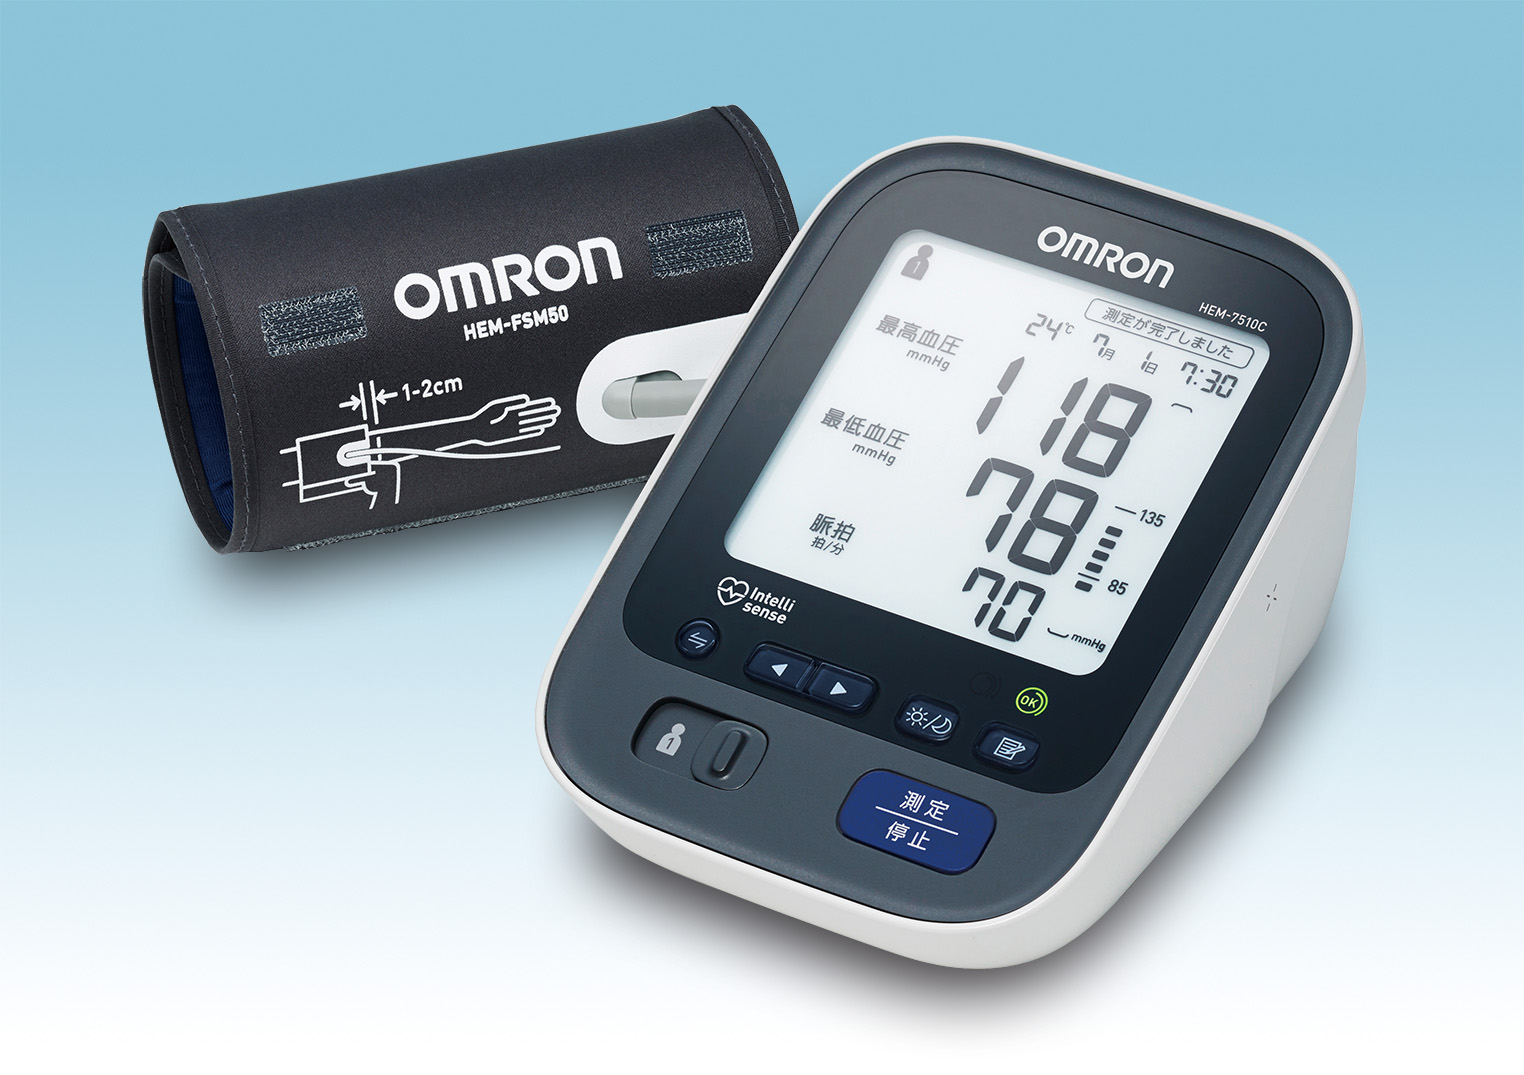 PR】高機能なのに操作しやすい上腕式血圧計「オムロン HEM-7510C」 - シニアガイド